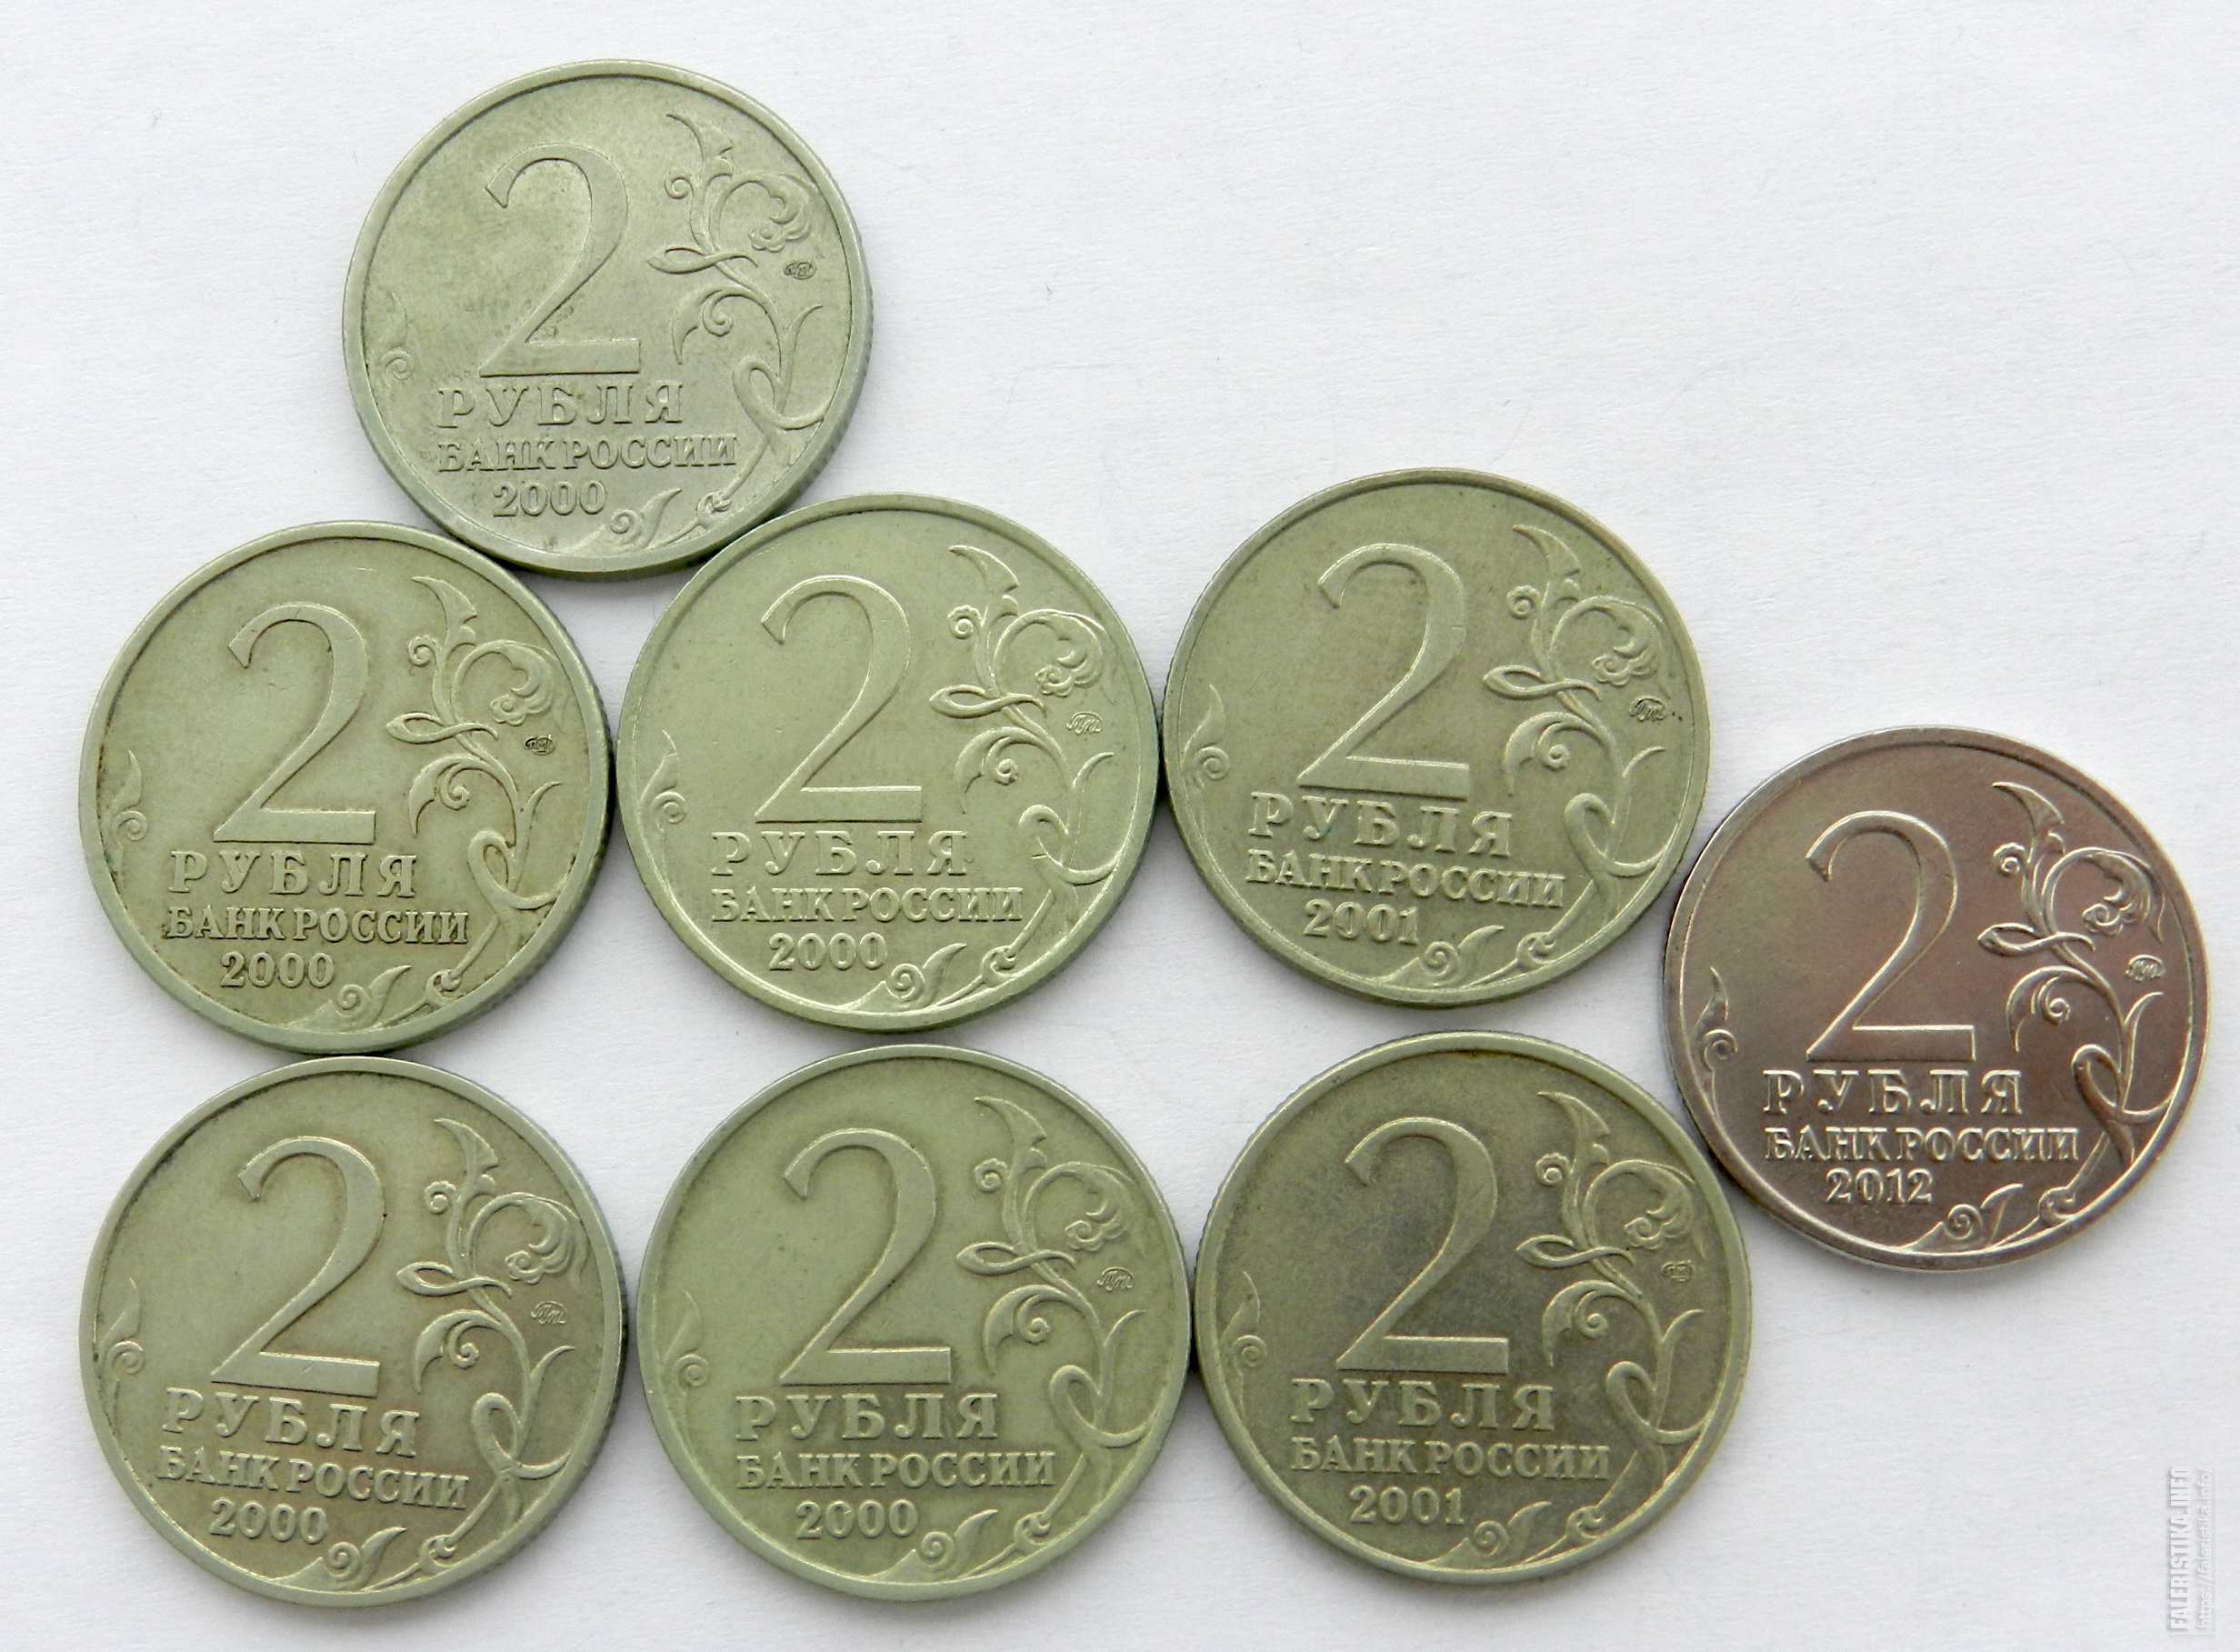 Рубль одной монетой 8. 8 Рублей три монеты. 2 Рубля Тула. 2 Рубля Сталинград.